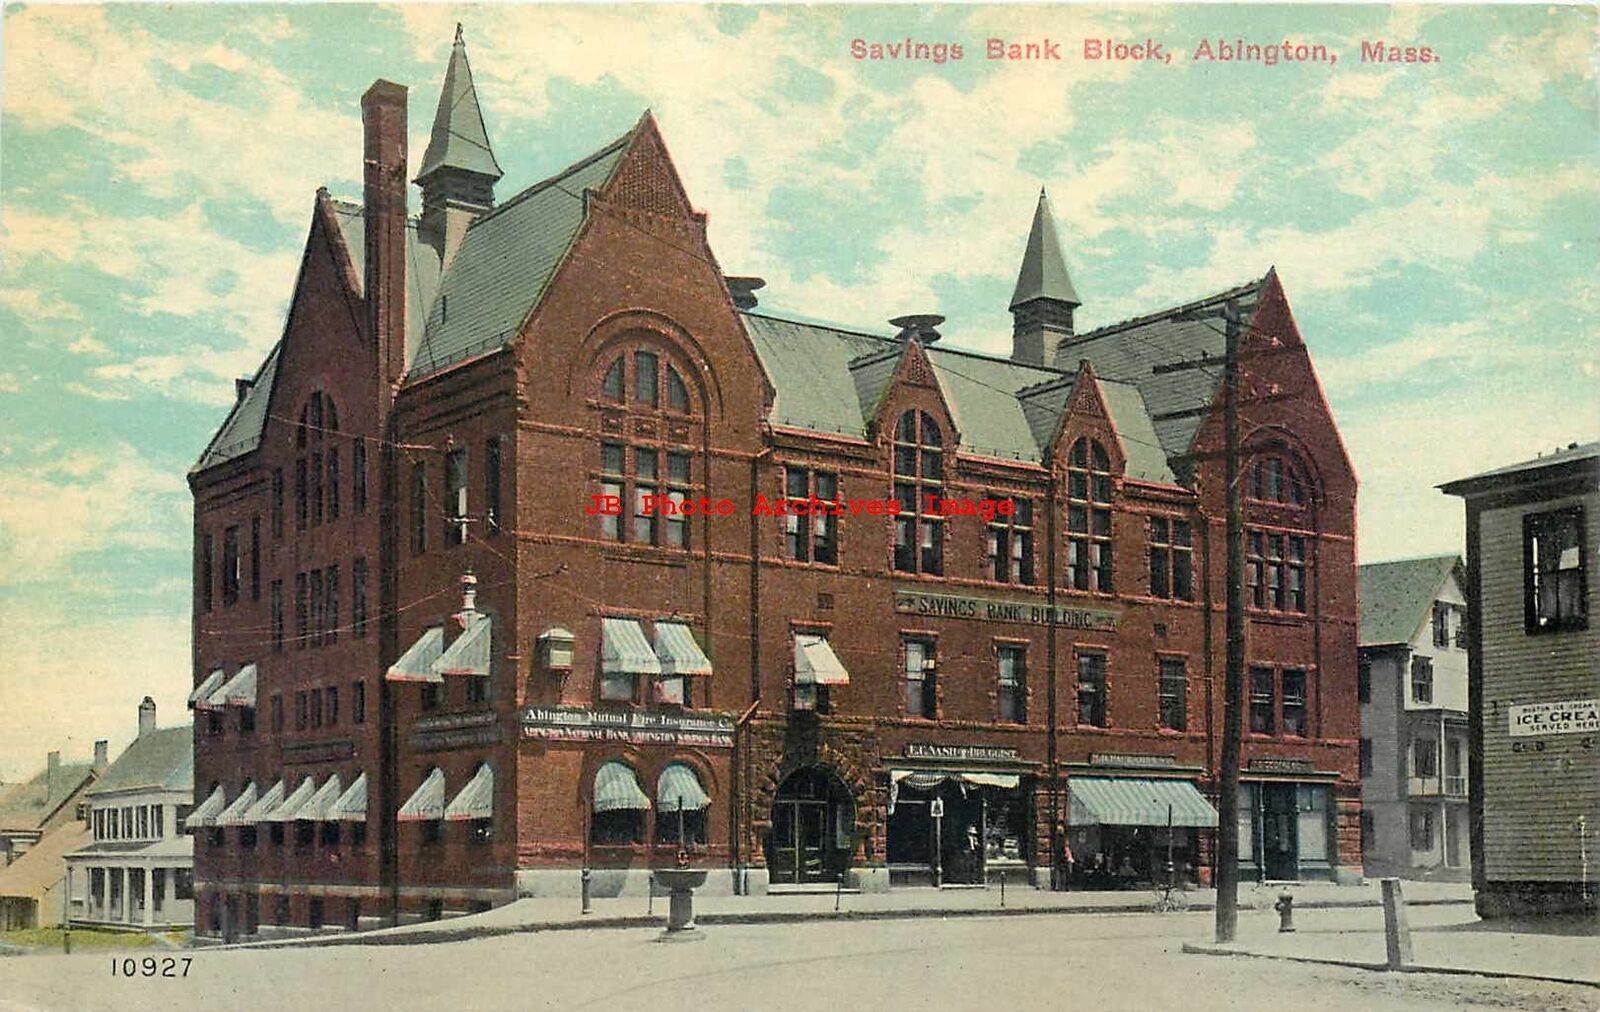 MA, Abington, Massachusetts, Savings Bank Block, Exterior View, No 10927